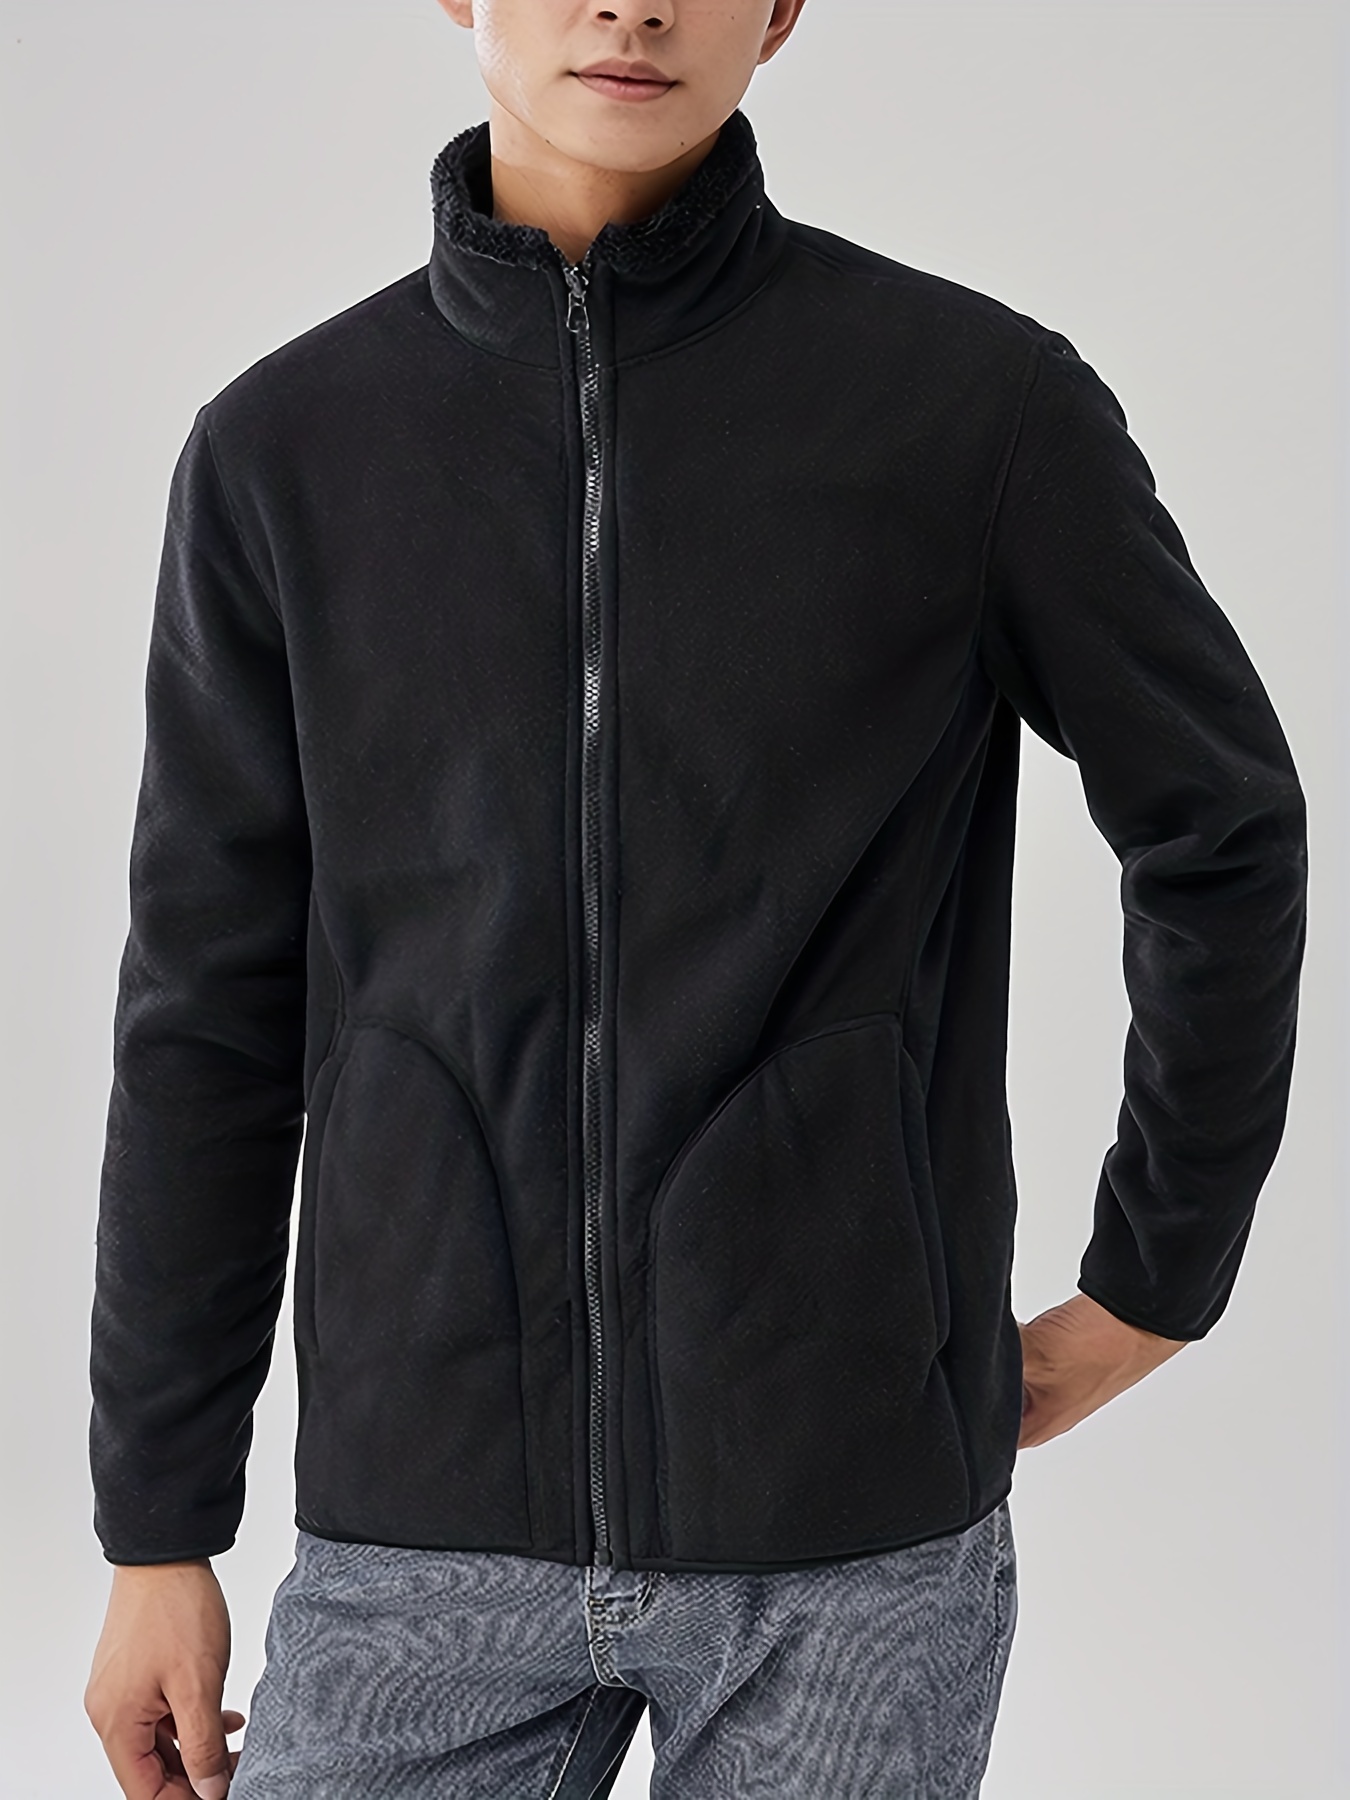 Men's Black Fleece Jackets